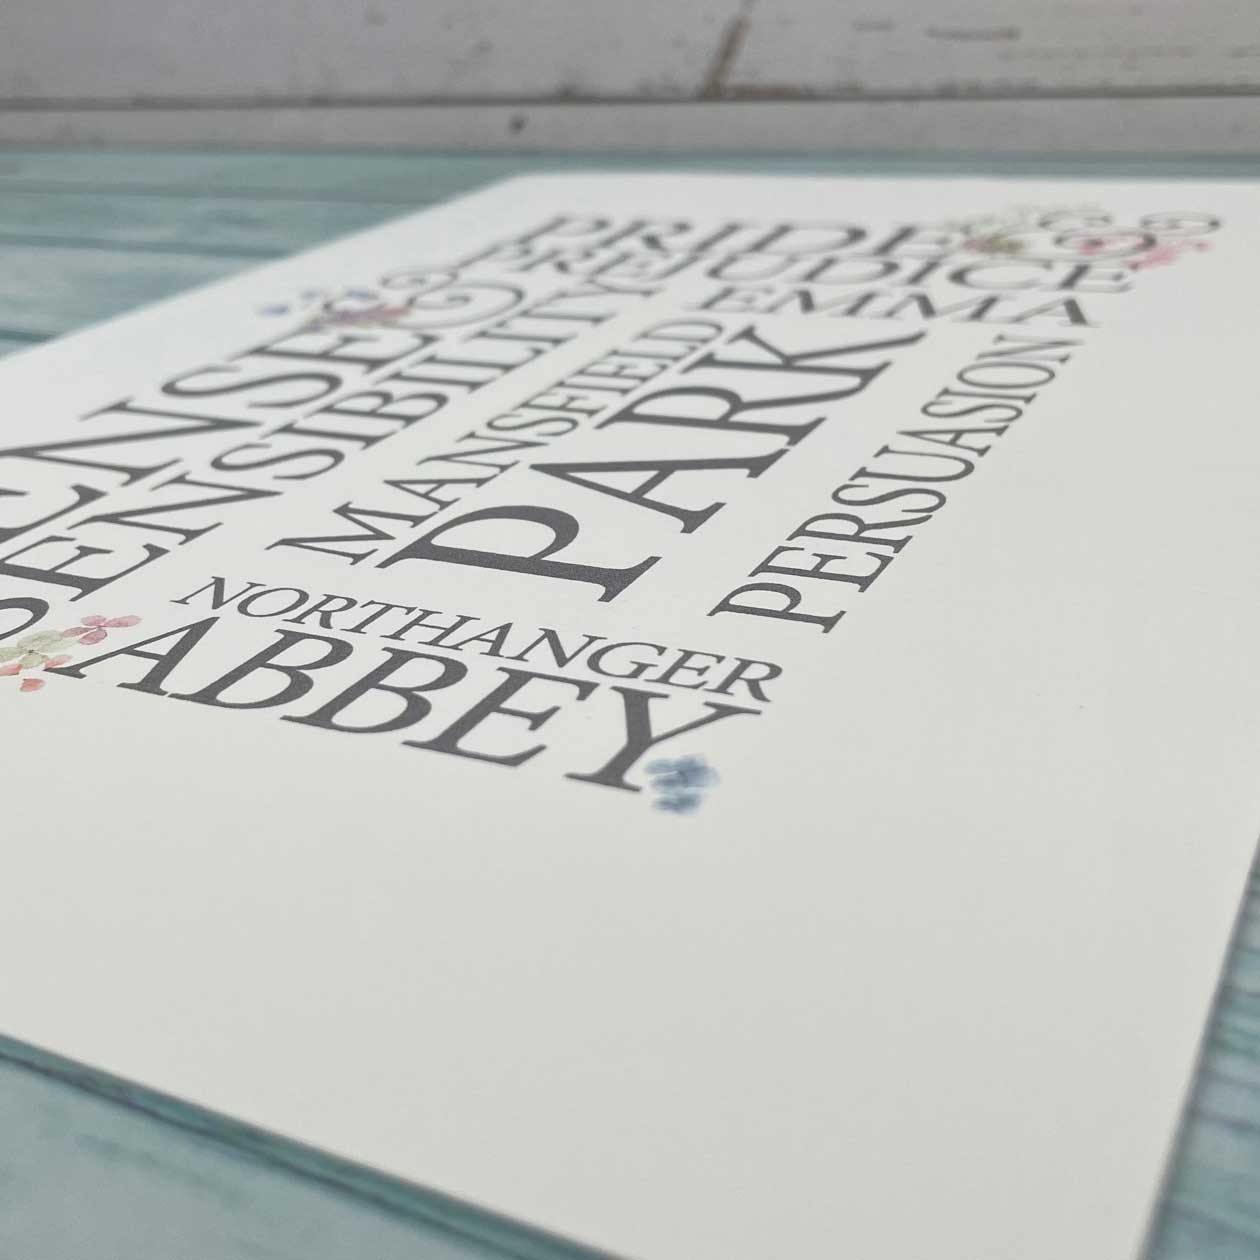 Jane Austen's Book Titles A4 Typography Print